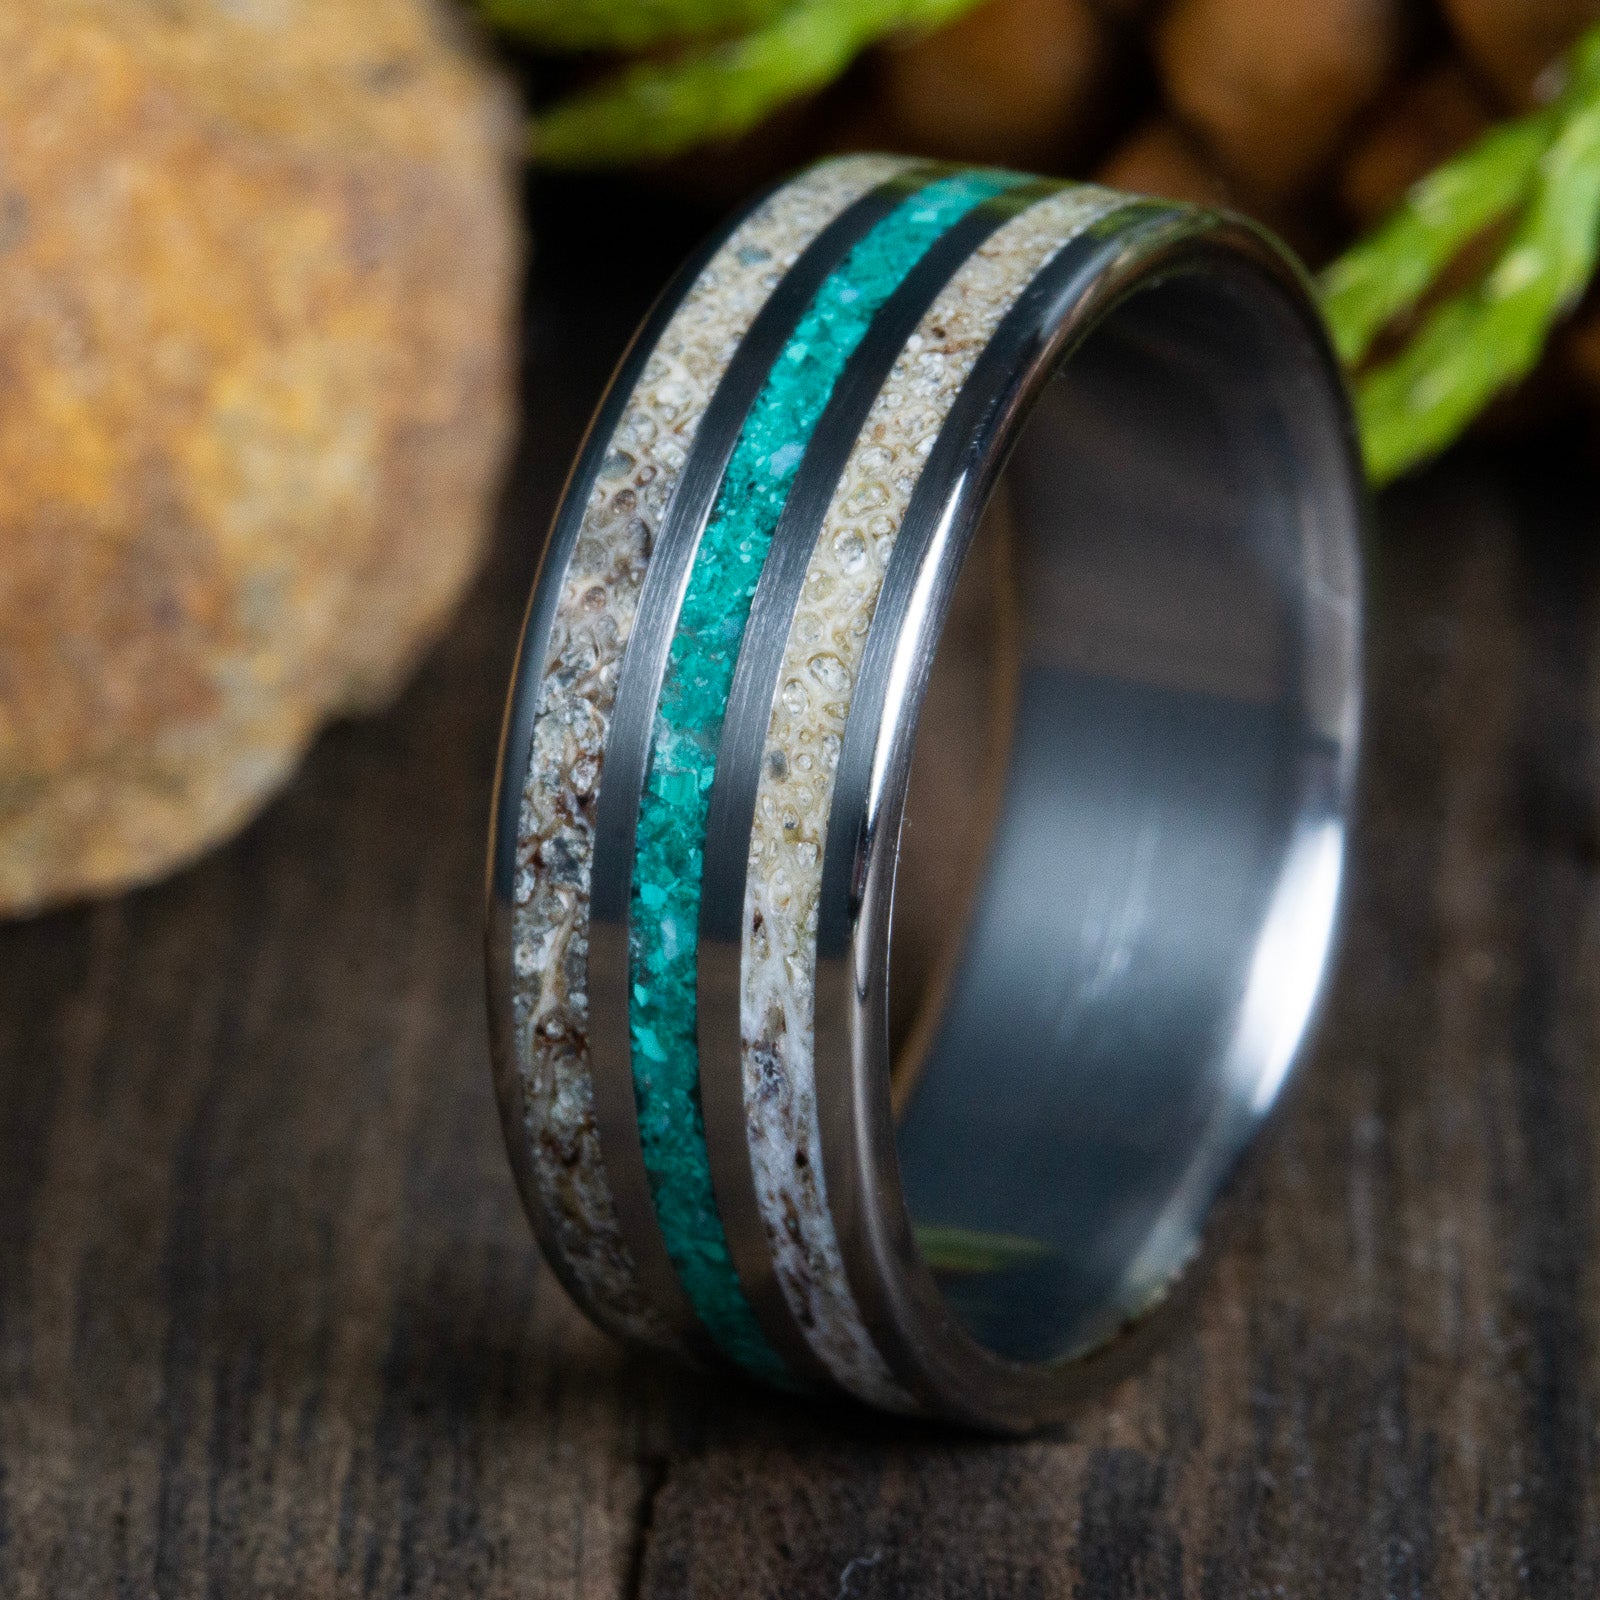 Antler ring with malachite